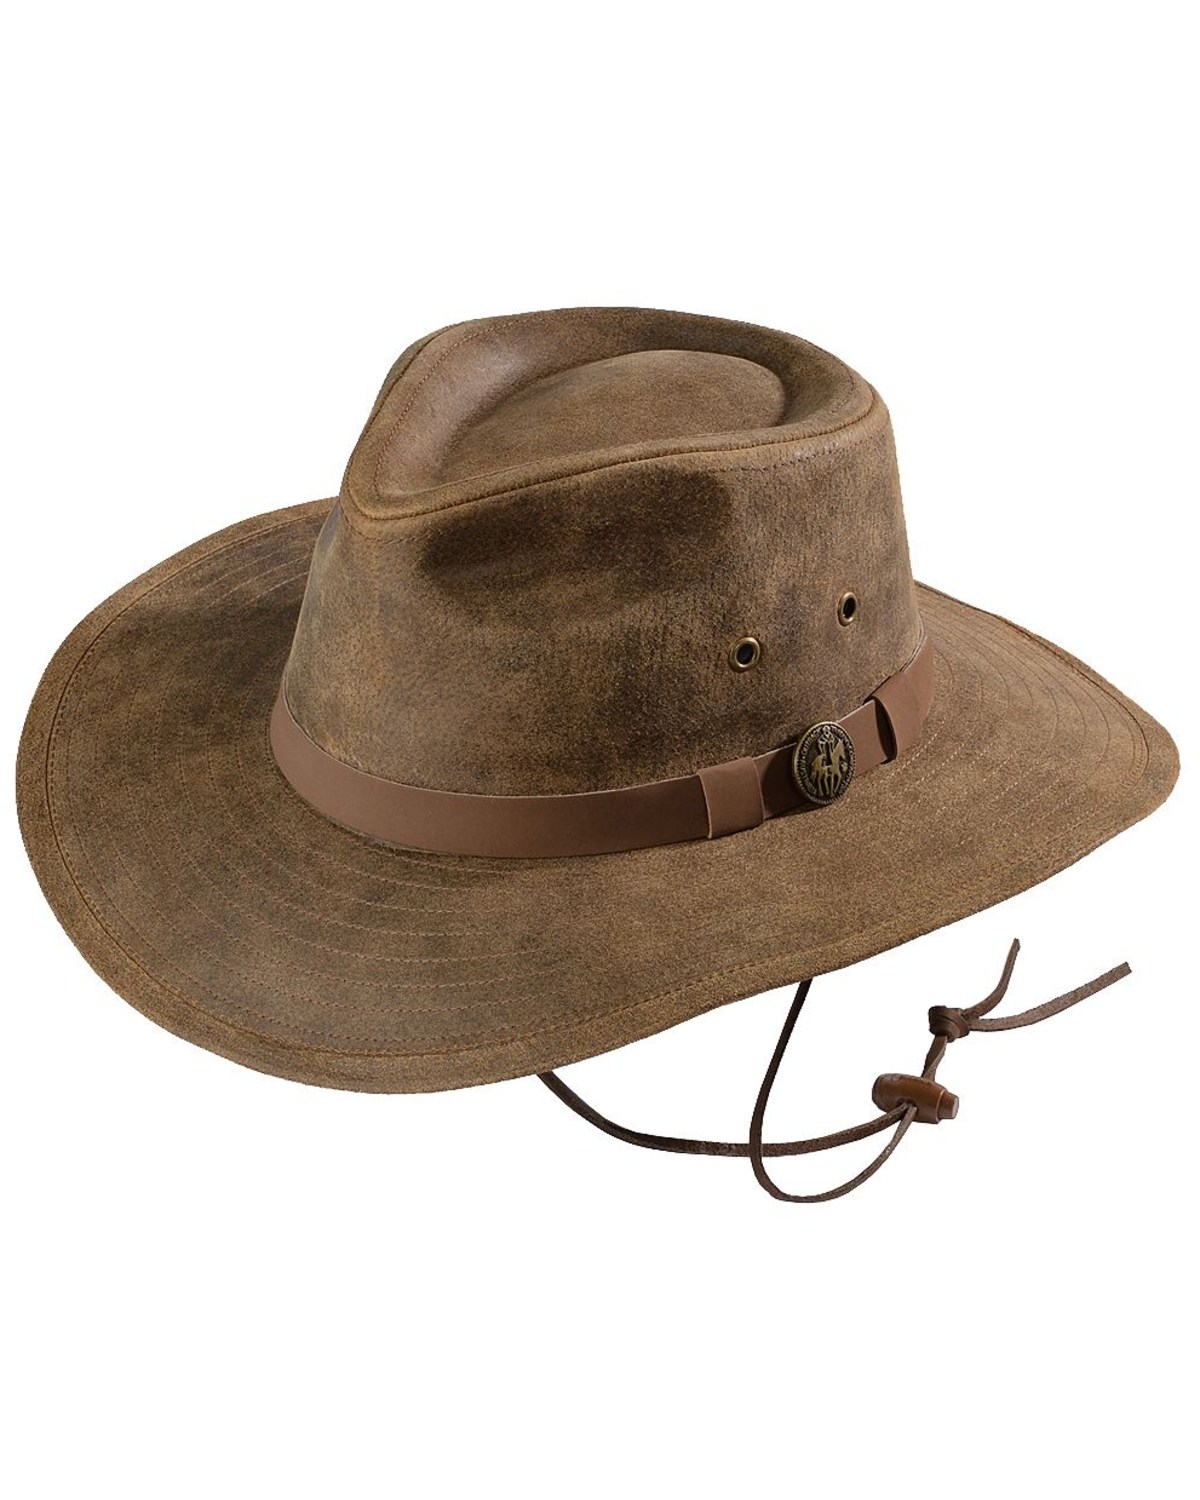 Outback Trading Co Men's Kodiak Leather Hat